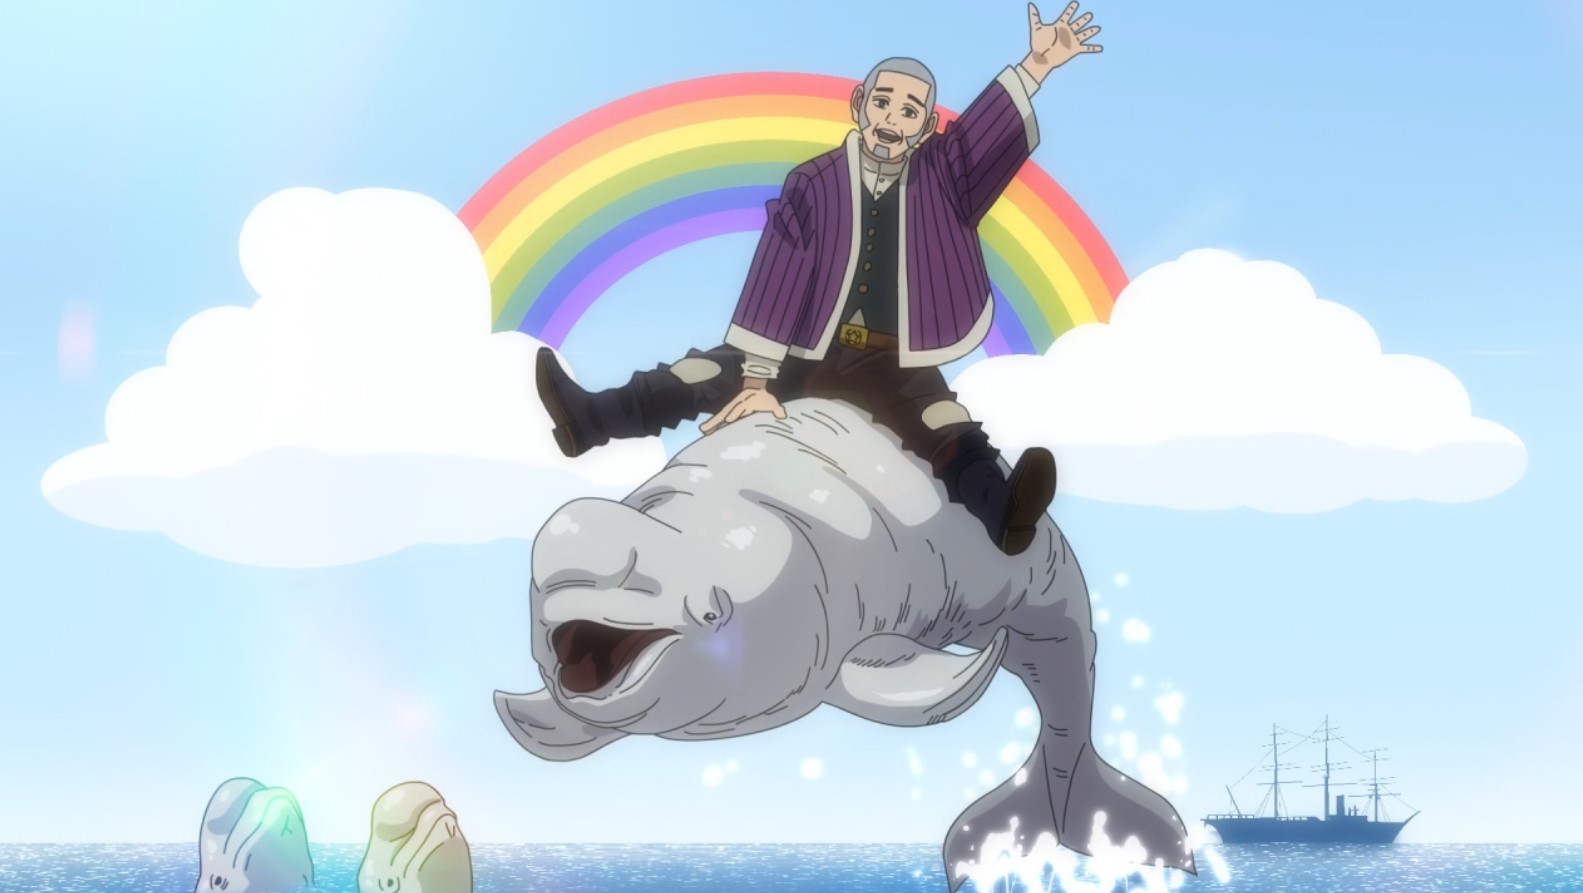 TVアニメ「ゴールデンカムイ」ショートアニメ「ゴールデン道画劇場」#30「イルカにのった白石編」